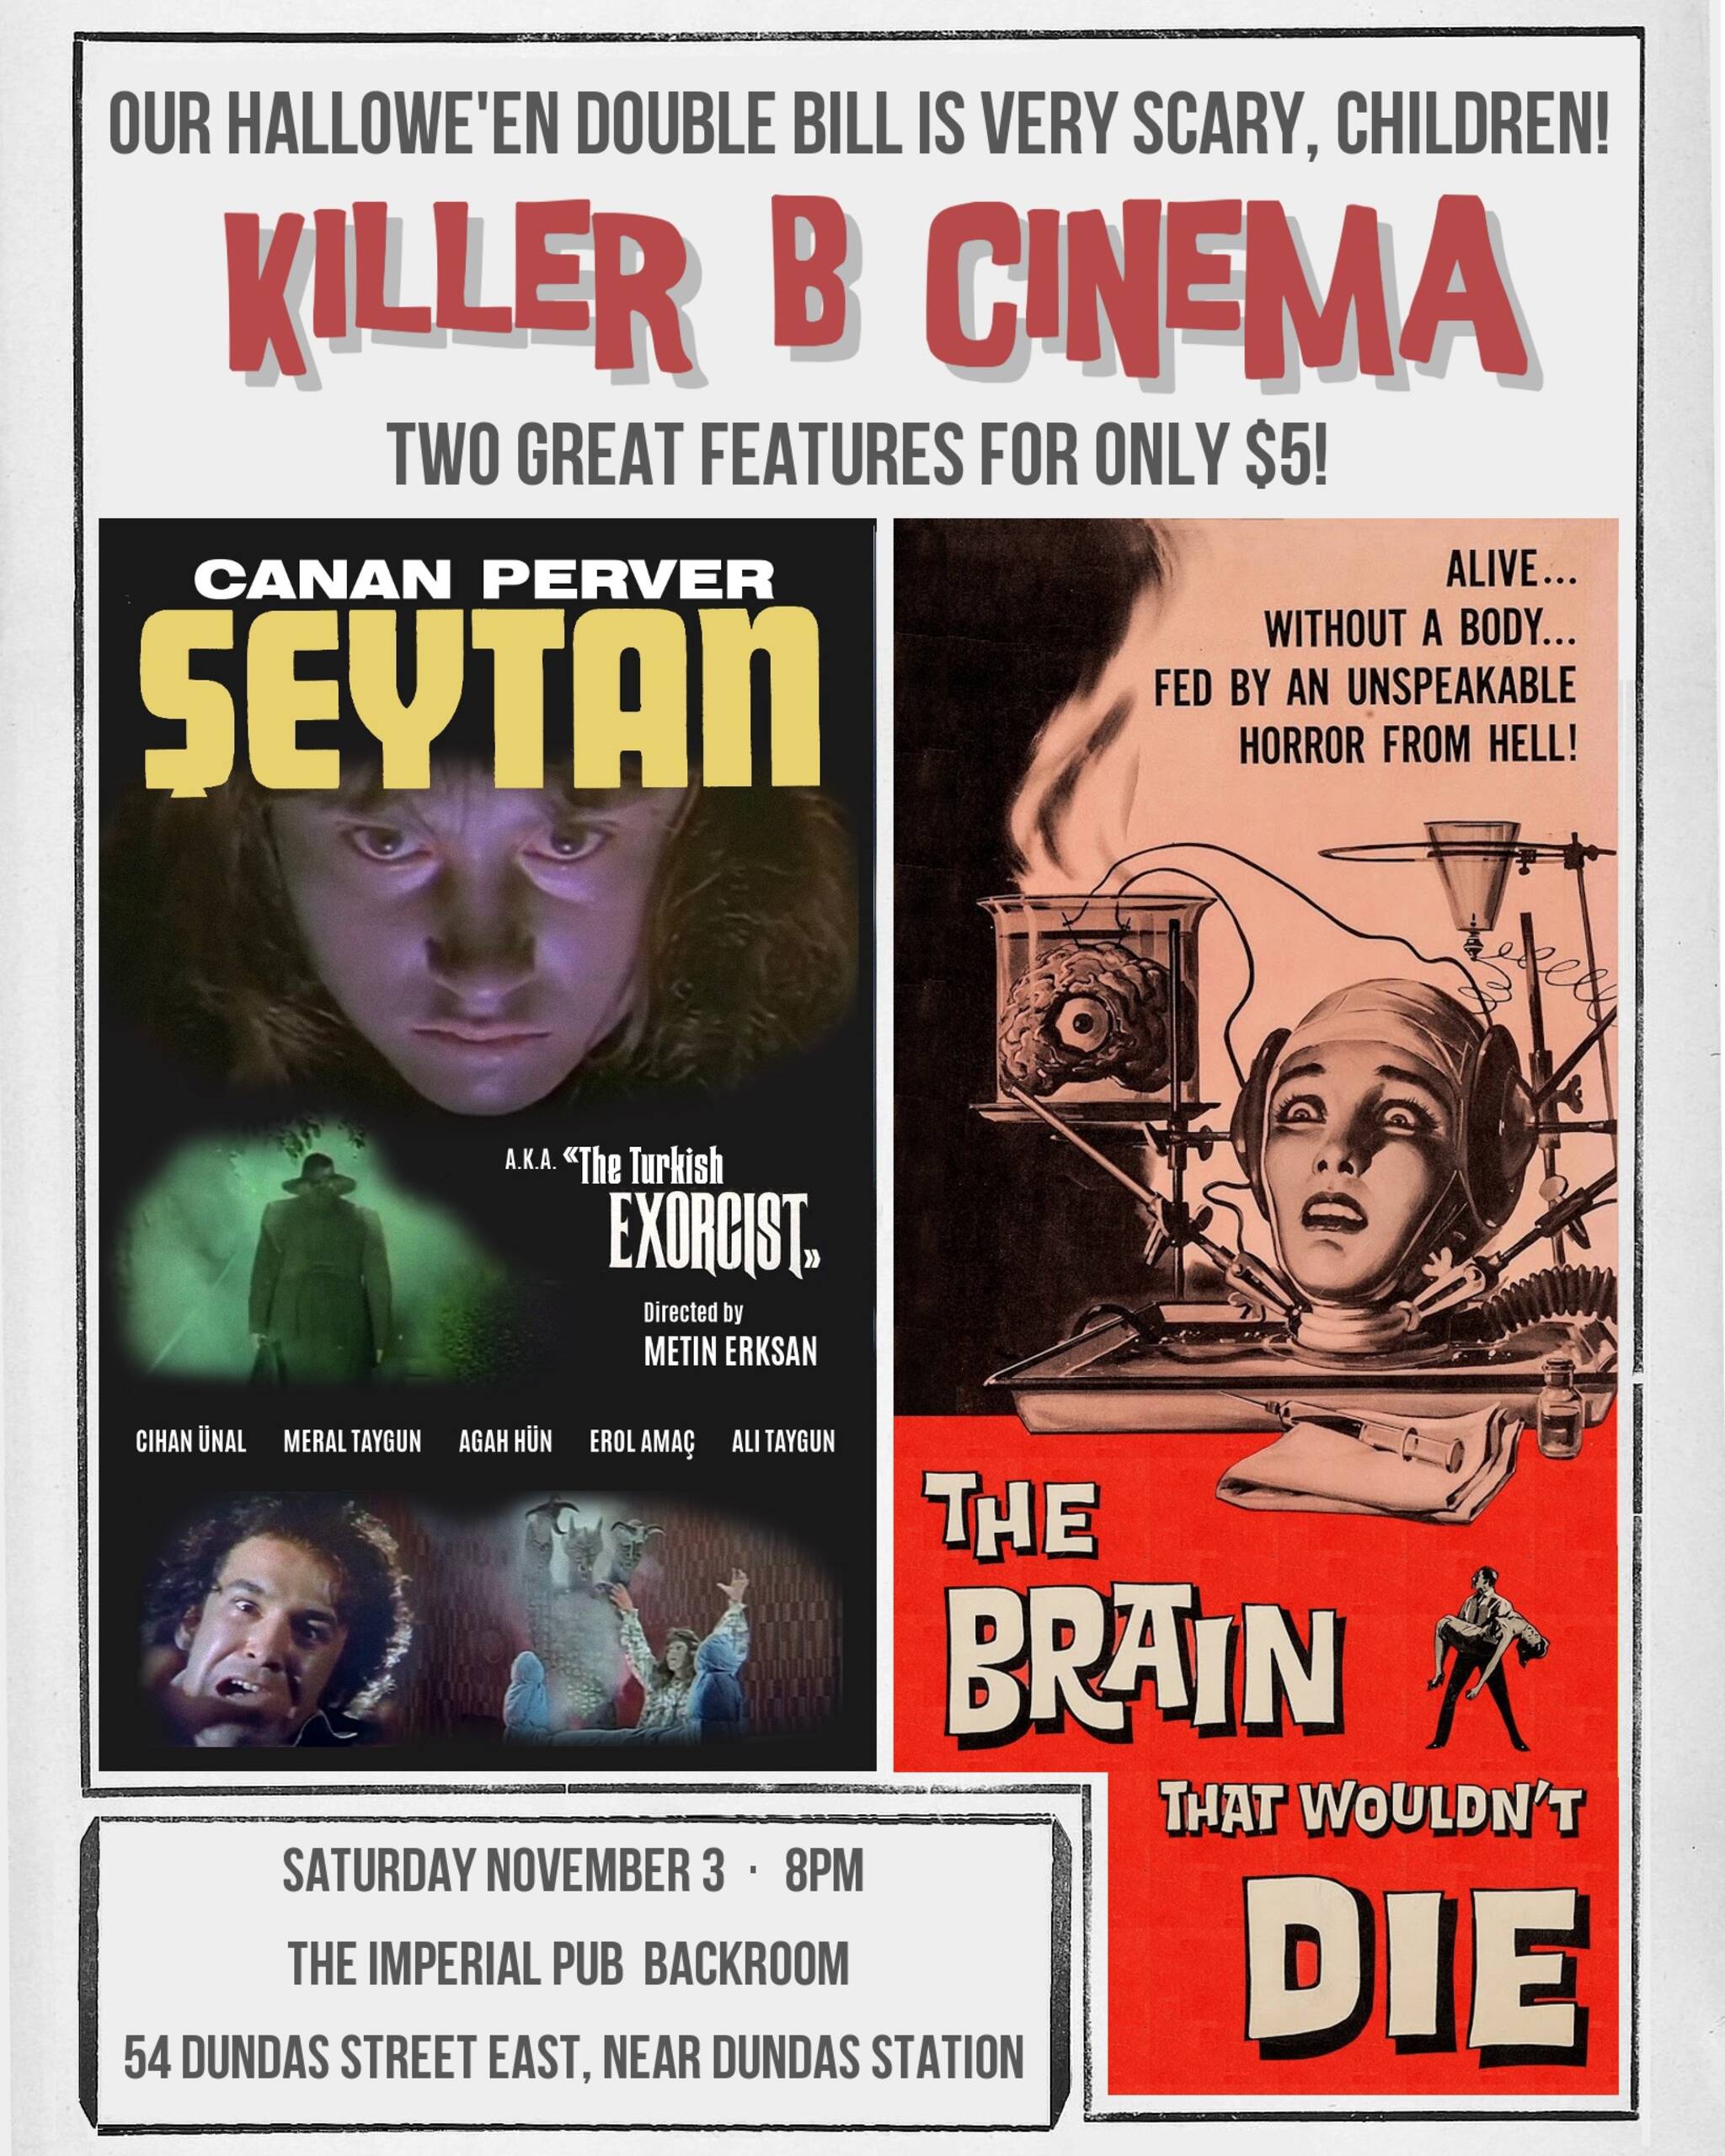 Killer B Cinema Presents Turkish Exorcist and The Brain That